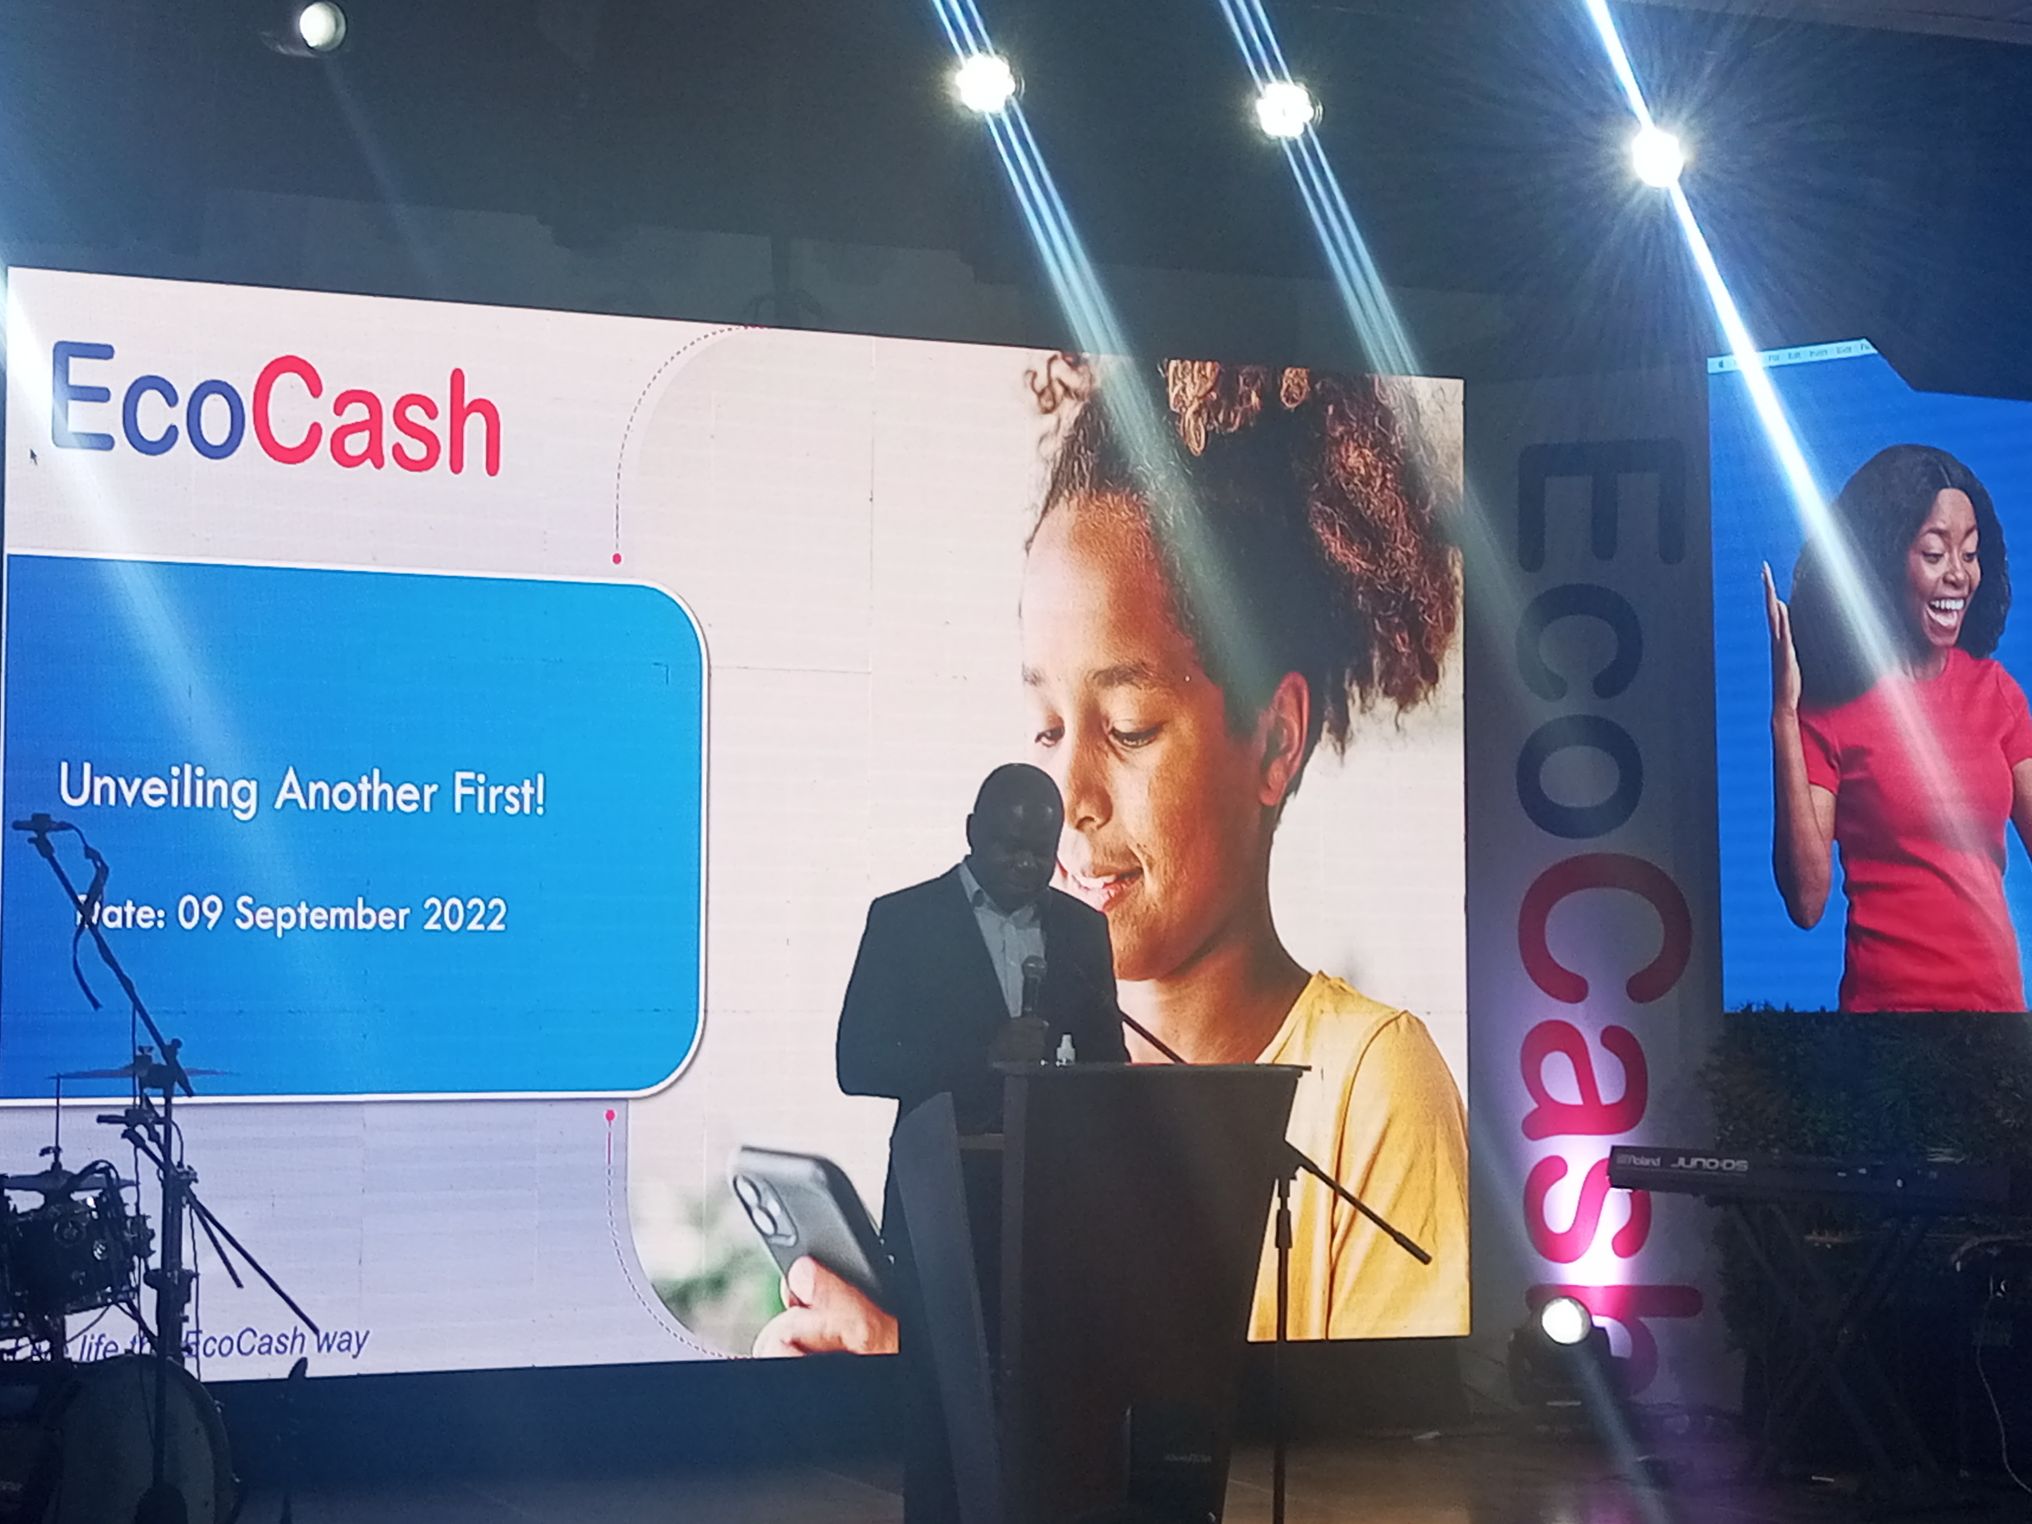 Ecocash Junior Wallet: Ensuring financially inclusive future for children